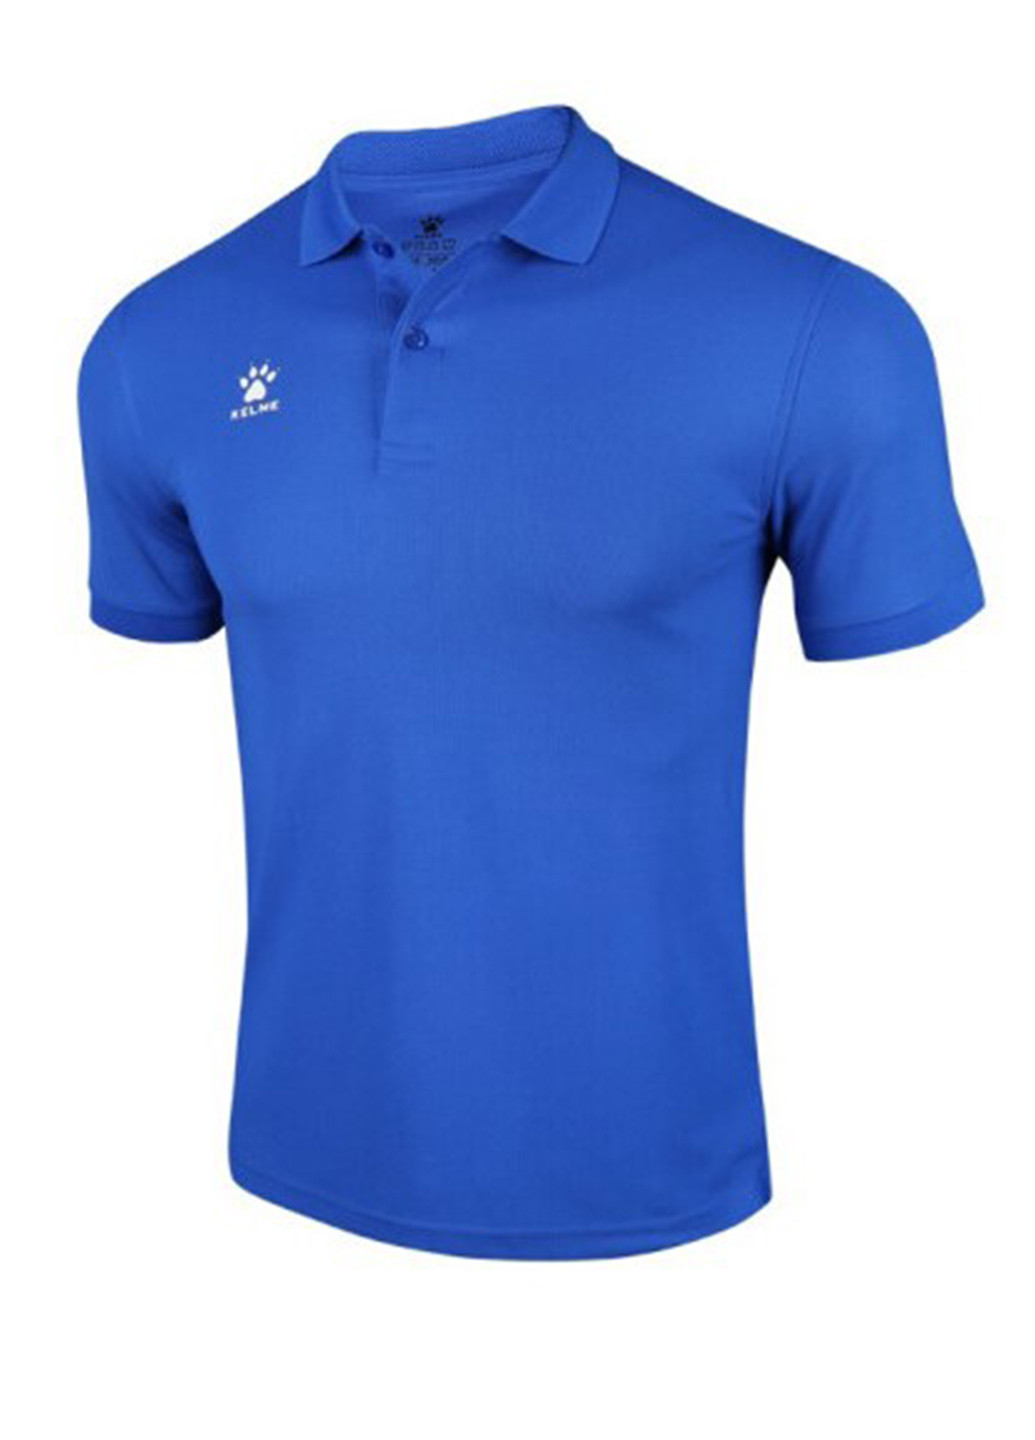 Светло-синяя футболка-поло для мужчин Kelme с логотипом